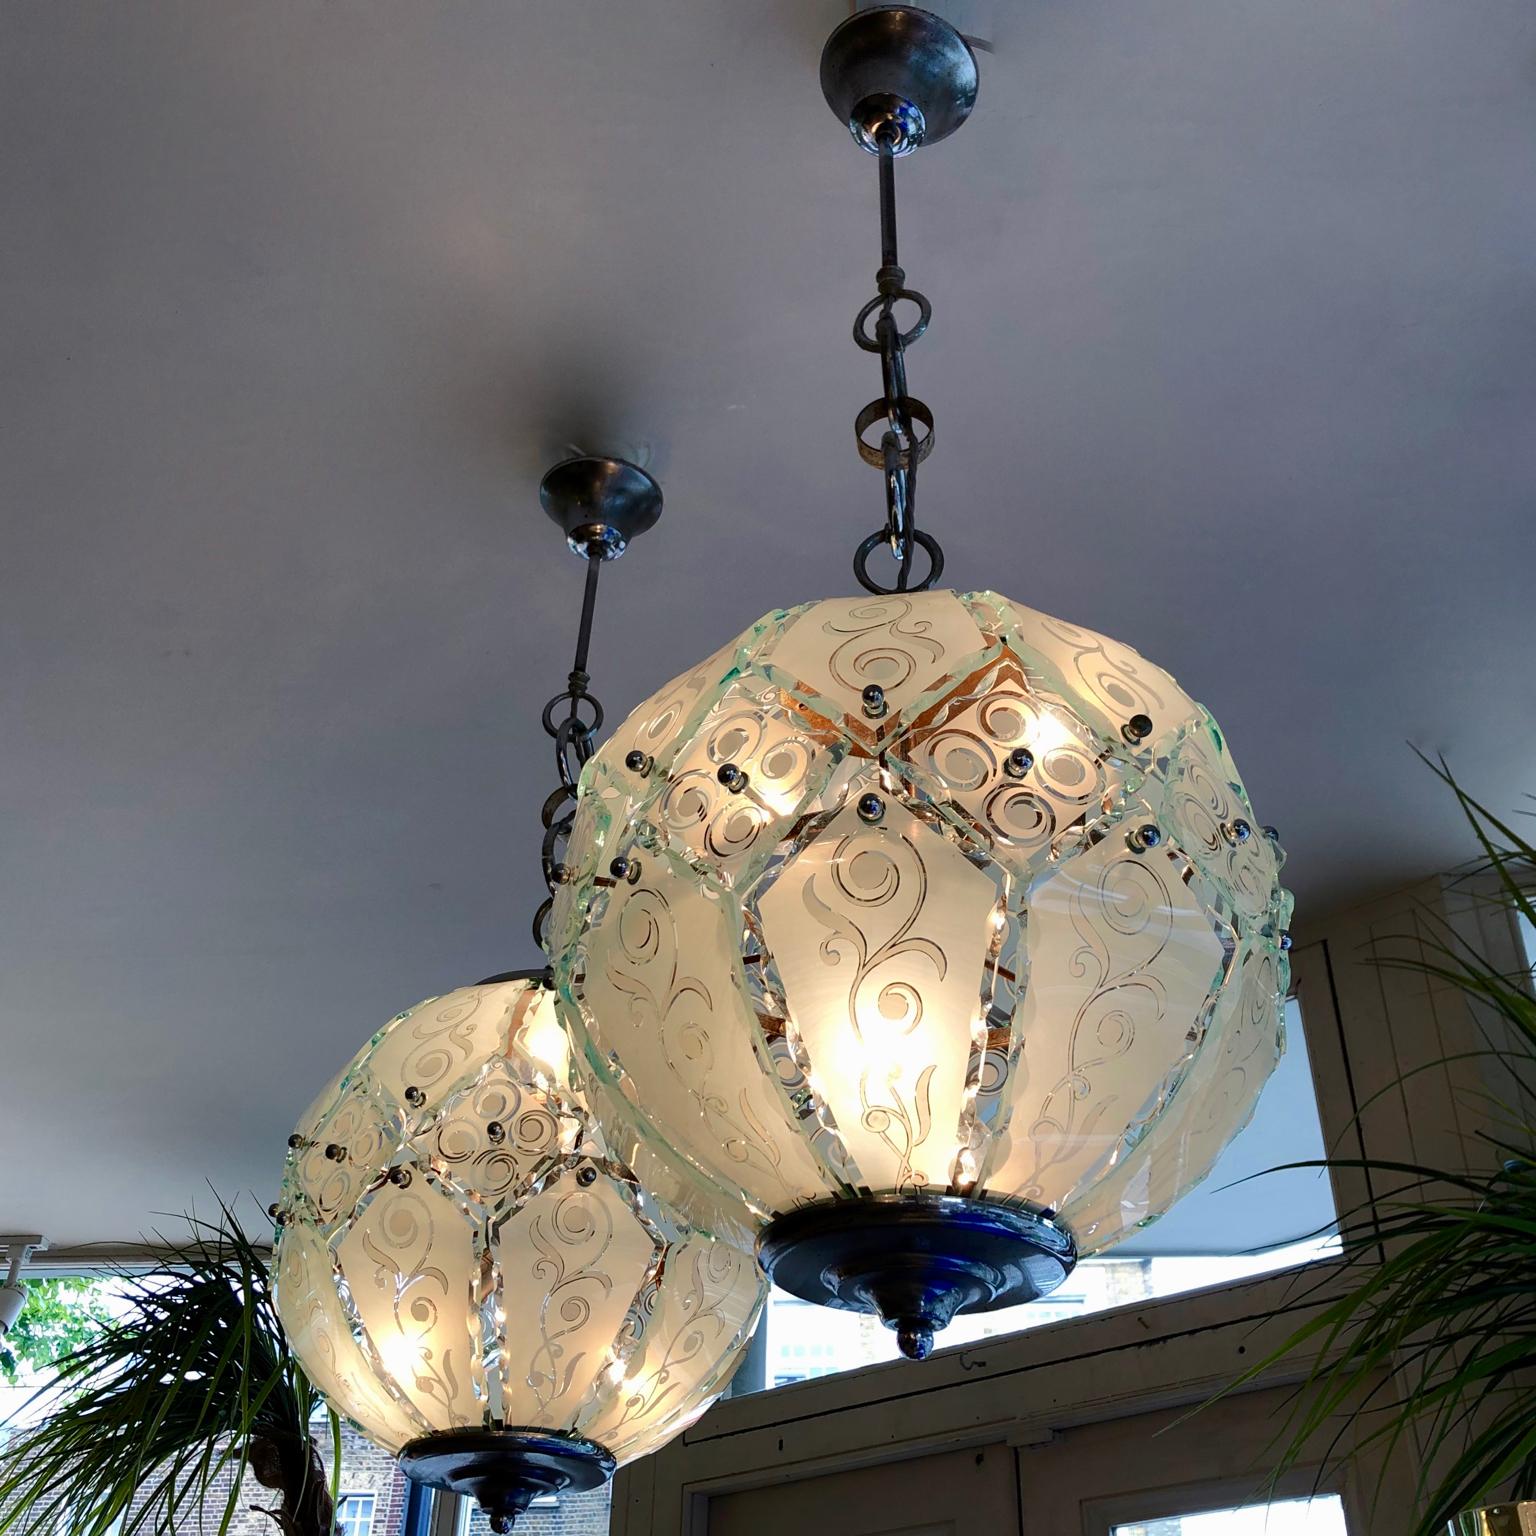 20th Century One Midcentury Italian Pastel Aqua Segmented Glass Pendant Ceiling Globe Light